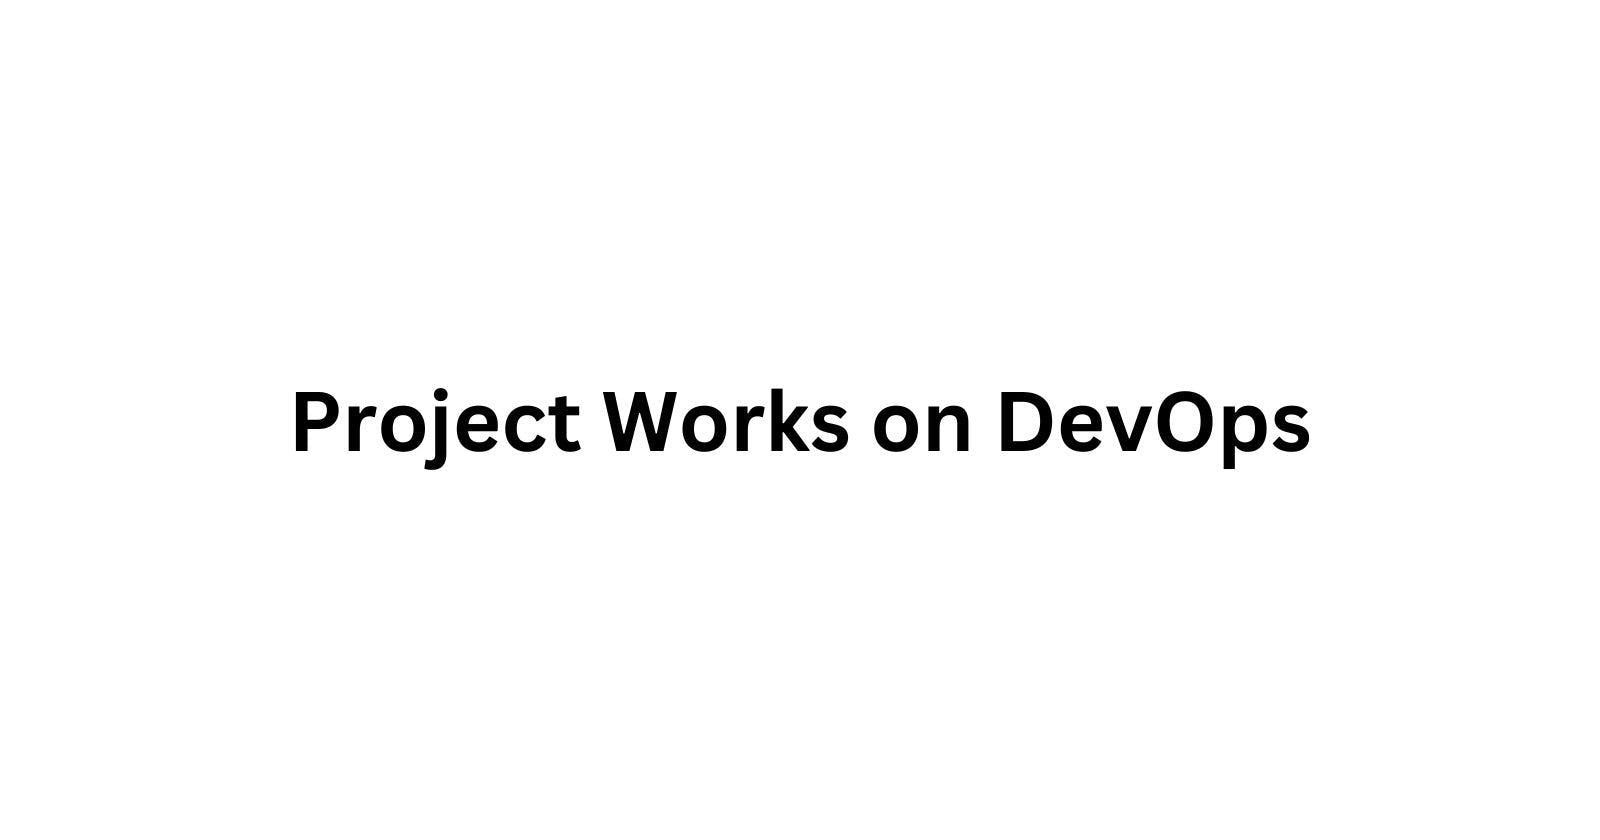 Project works on DevOps